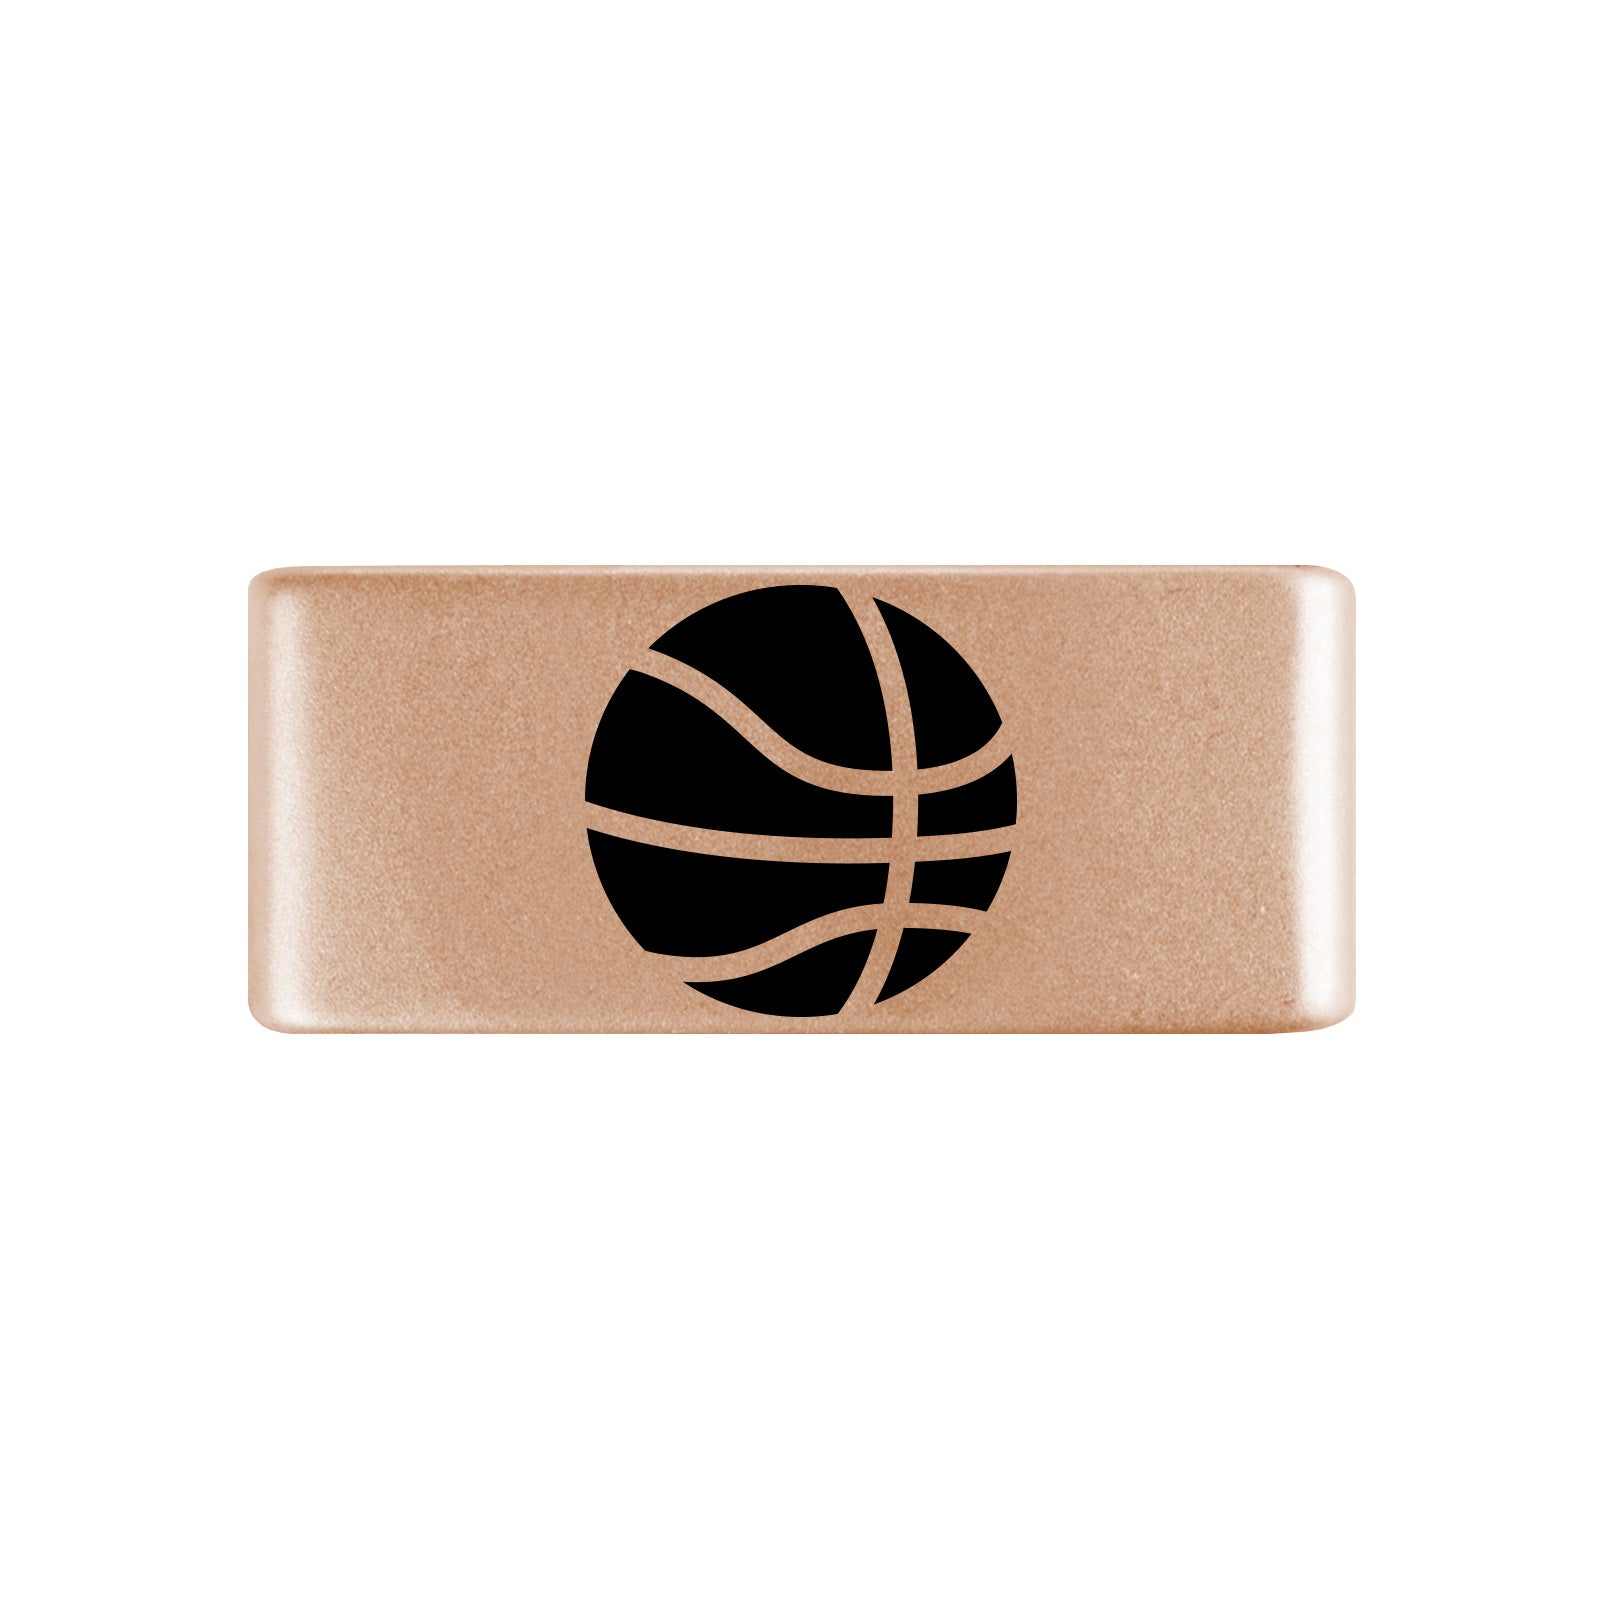 Basketball Badge Badge 13mm - ROAD iD